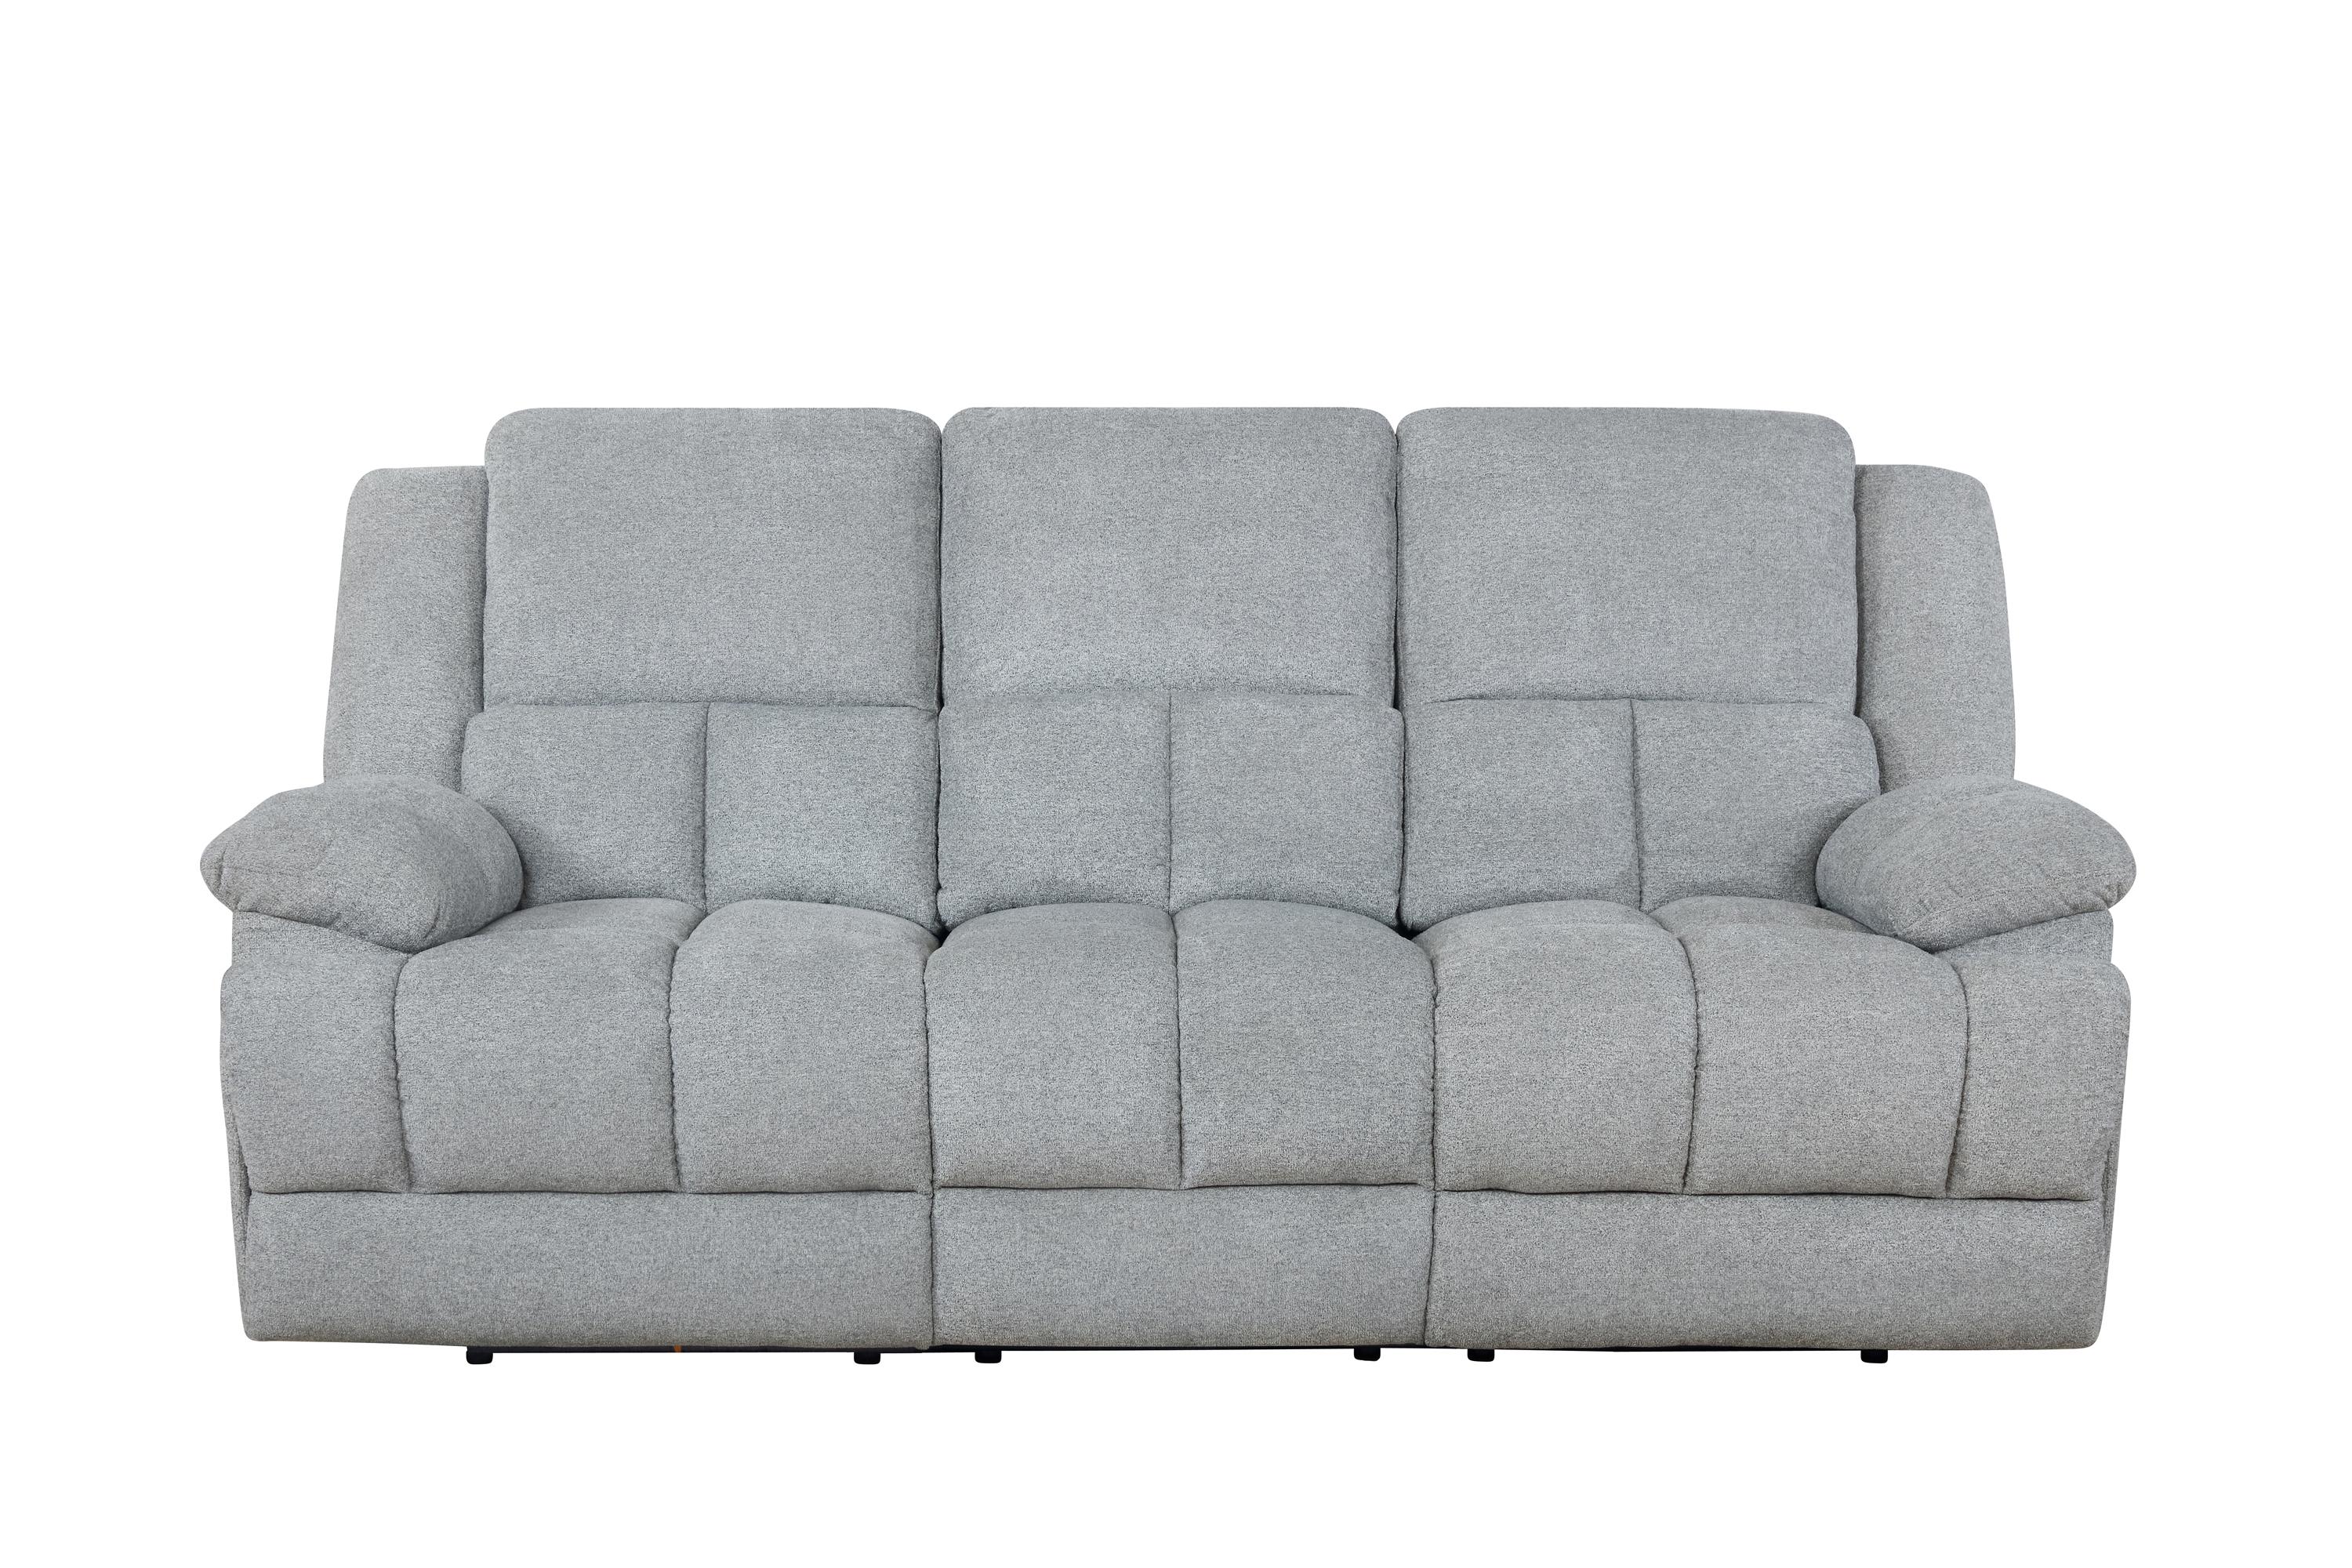 Modern Motion Sofa 602561 Waterbury 602561 in Gray 